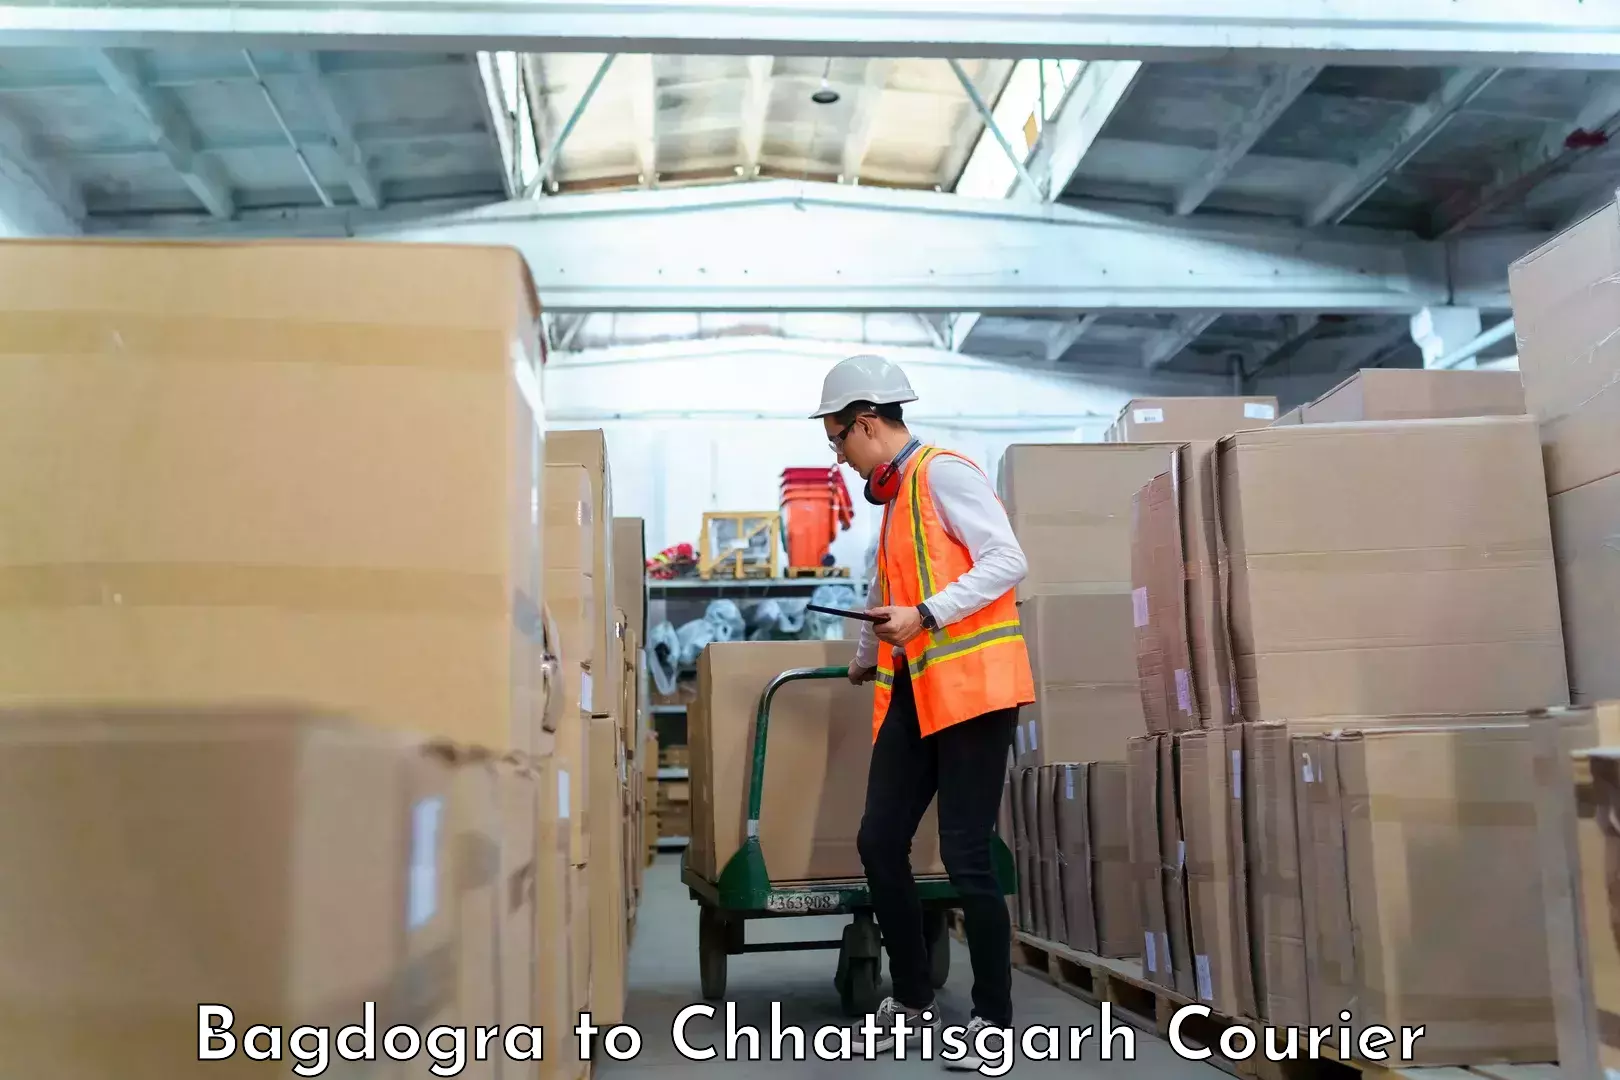 Baggage transport network Bagdogra to Patna Chhattisgarh